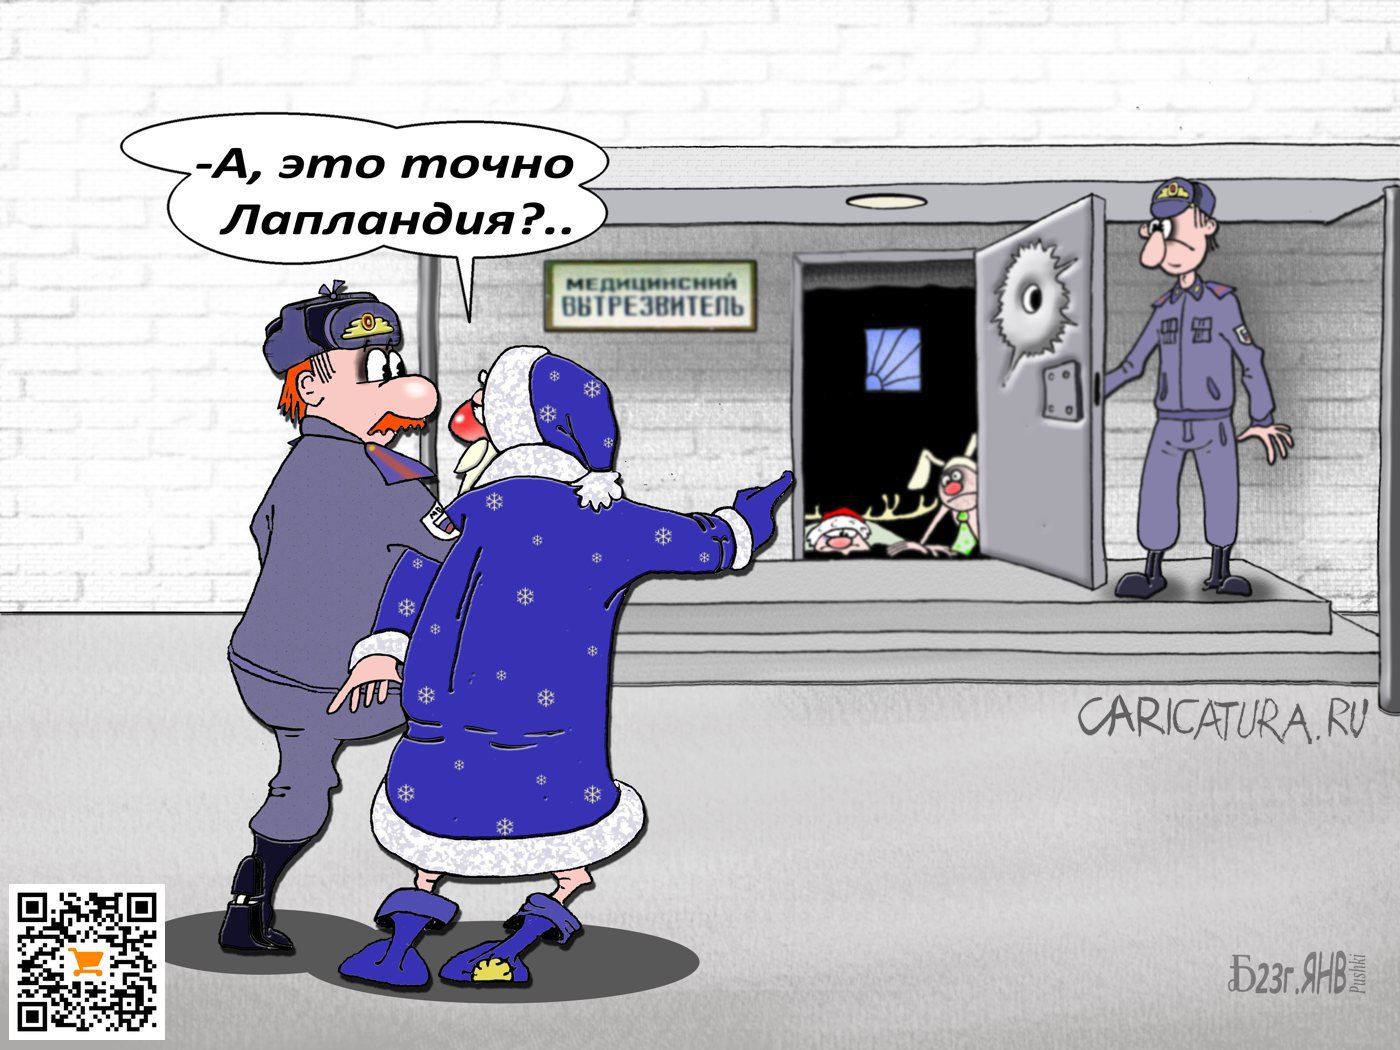 Карикатура "Про Лапландию", Борис Демин